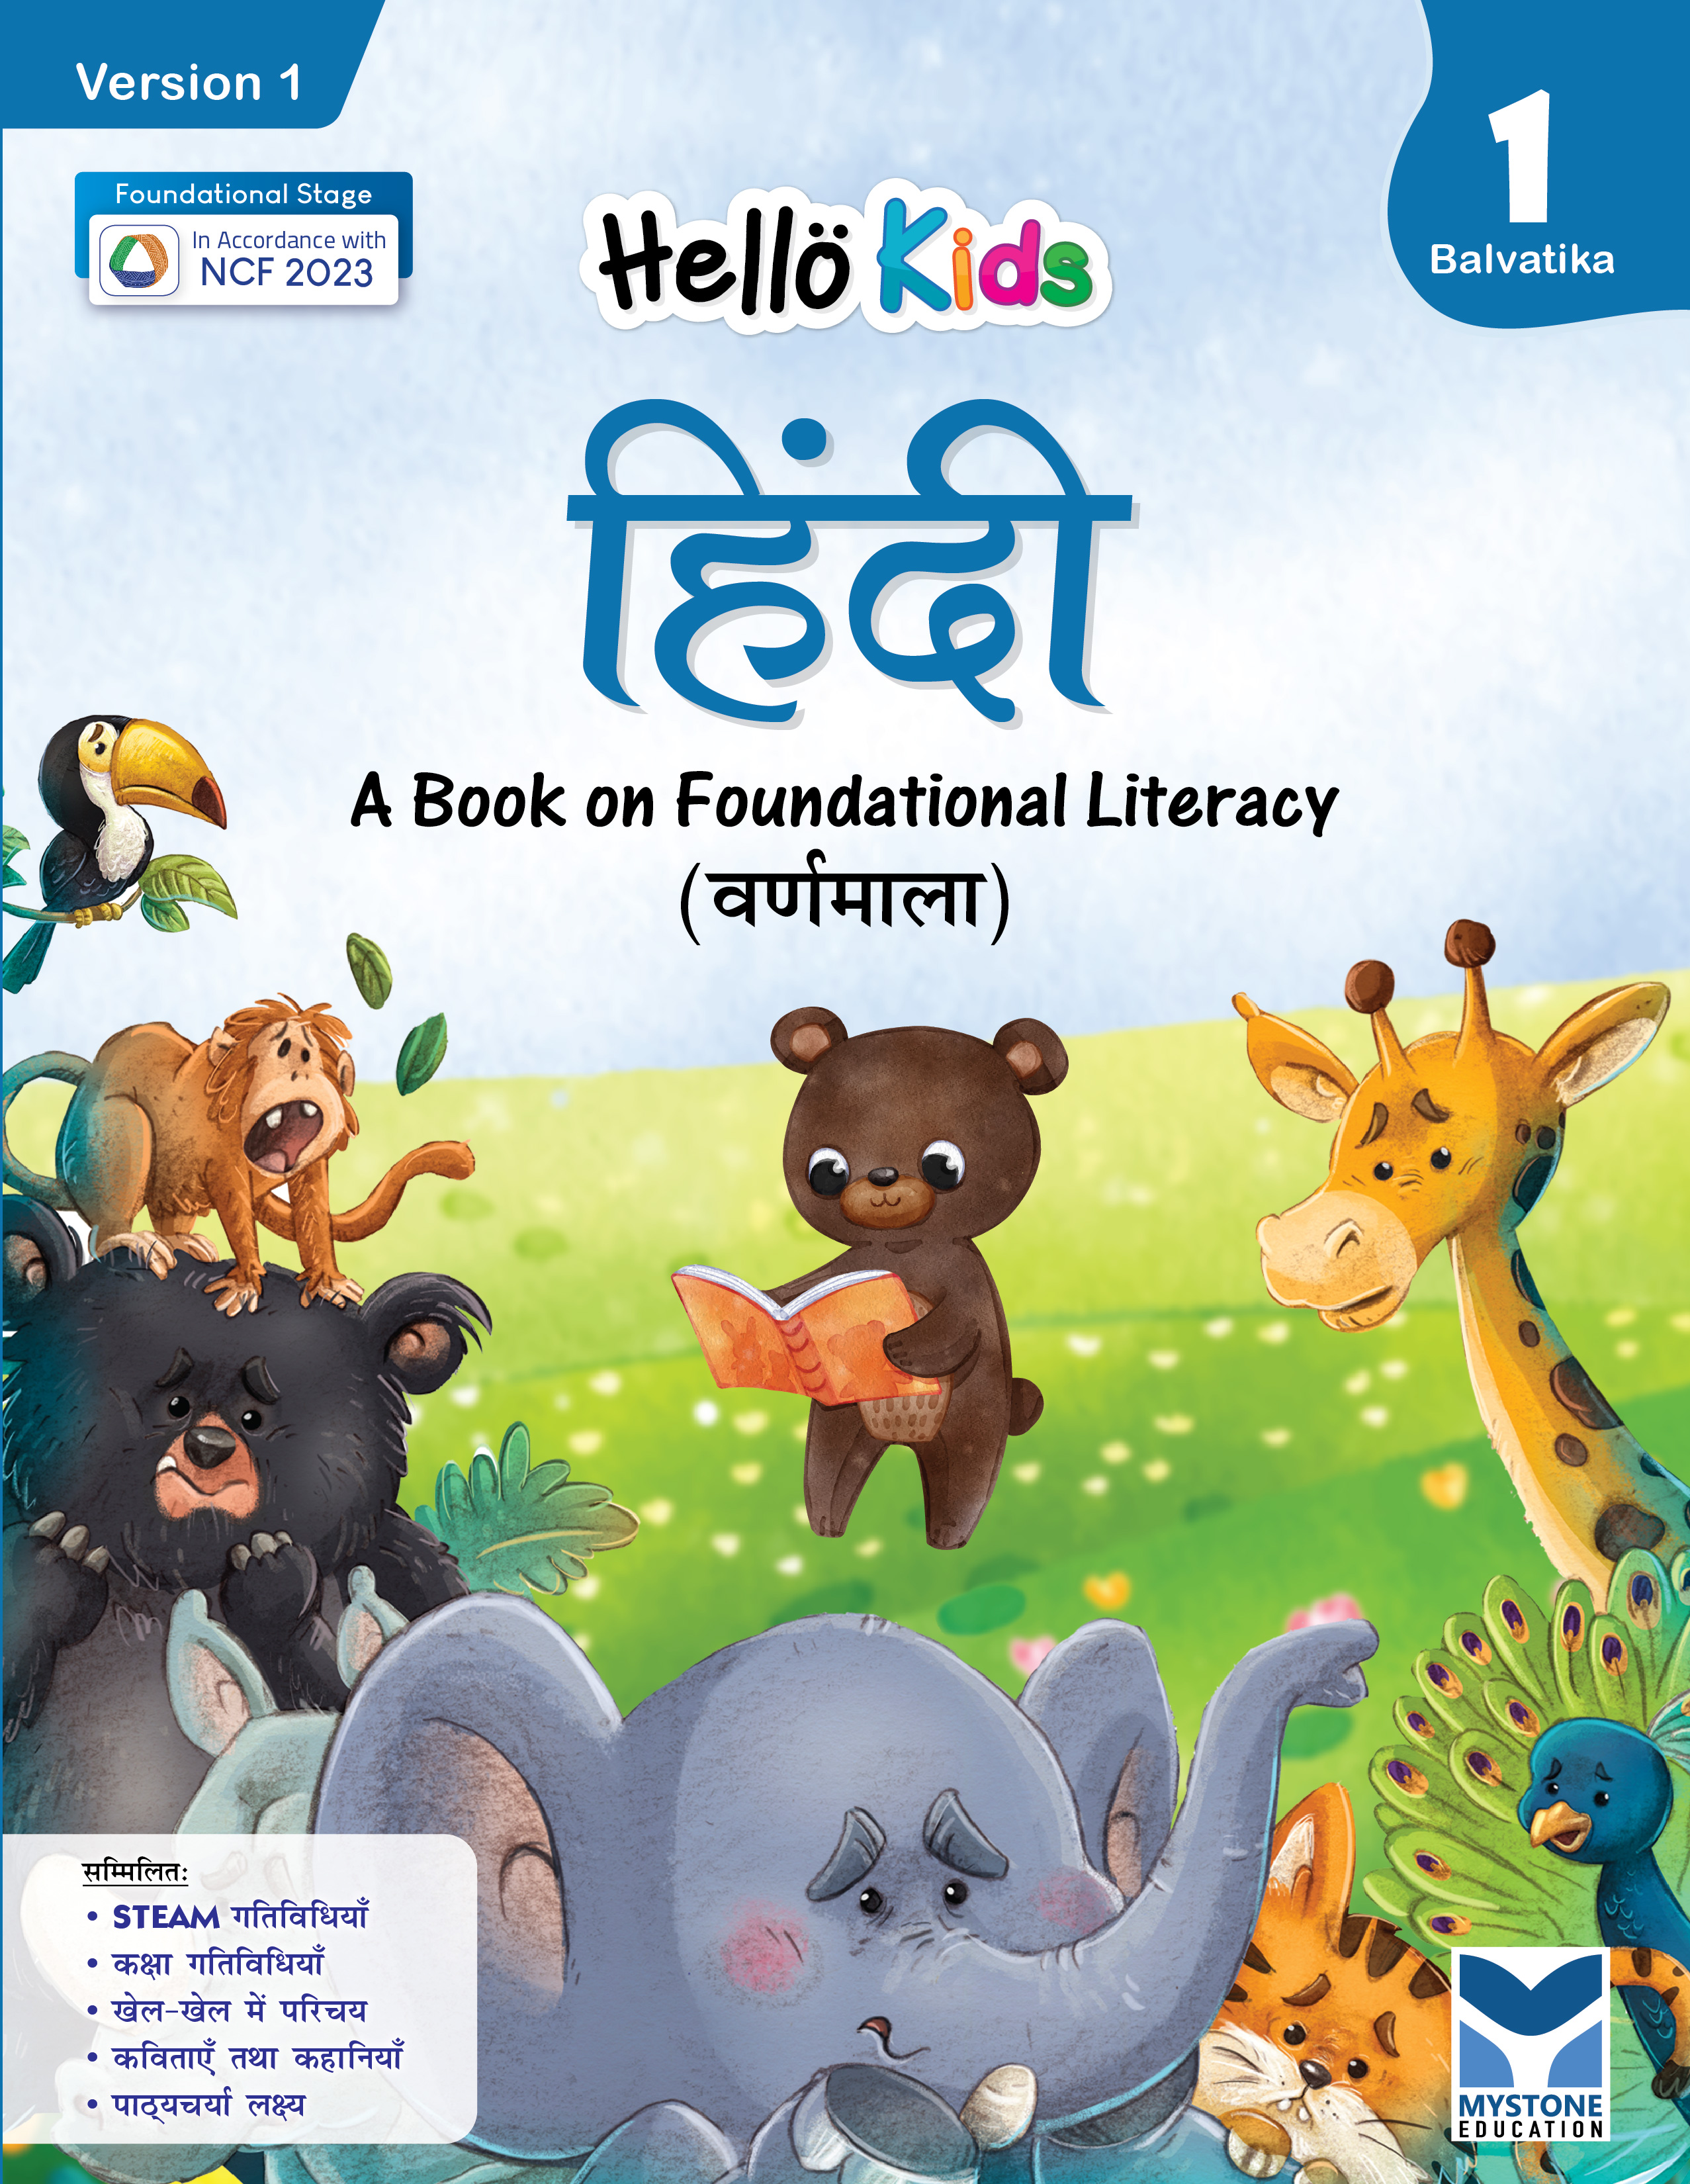 Hello Kids Hindi Balvatika 1 Ver. 1